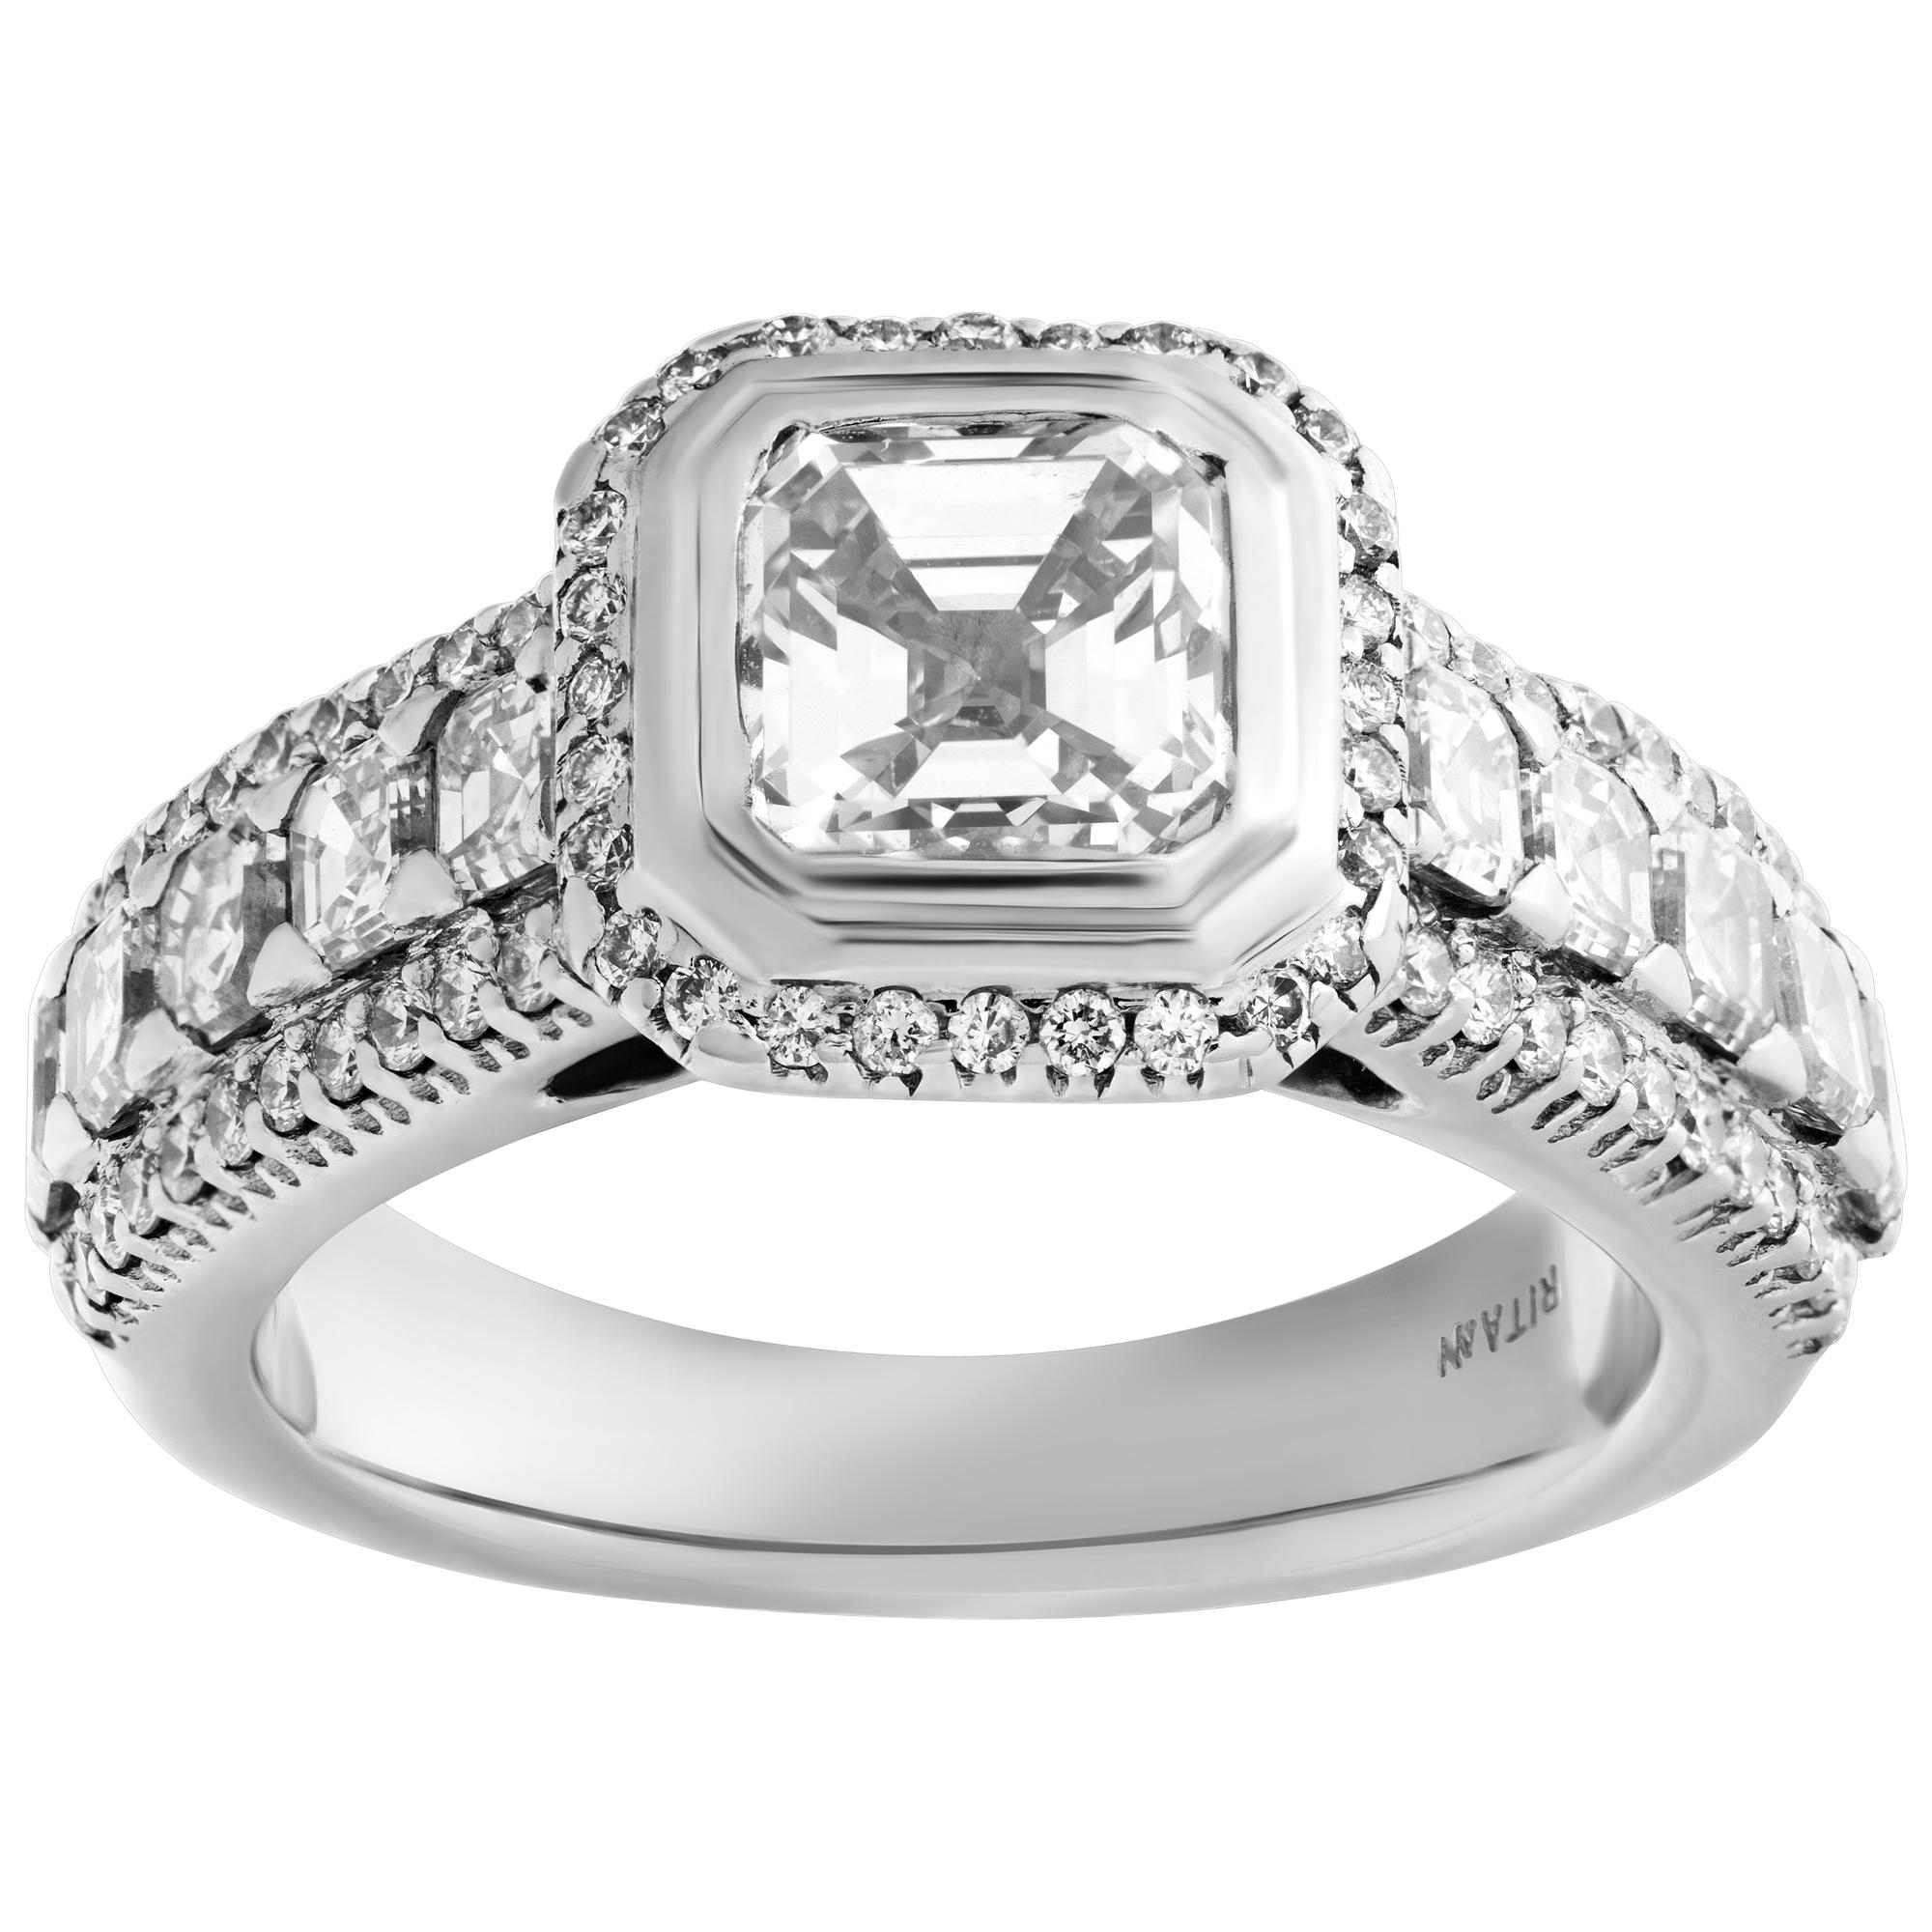 White gold diamond ring w/ mounted diamond set in white gold w/ diamond accents For Sale